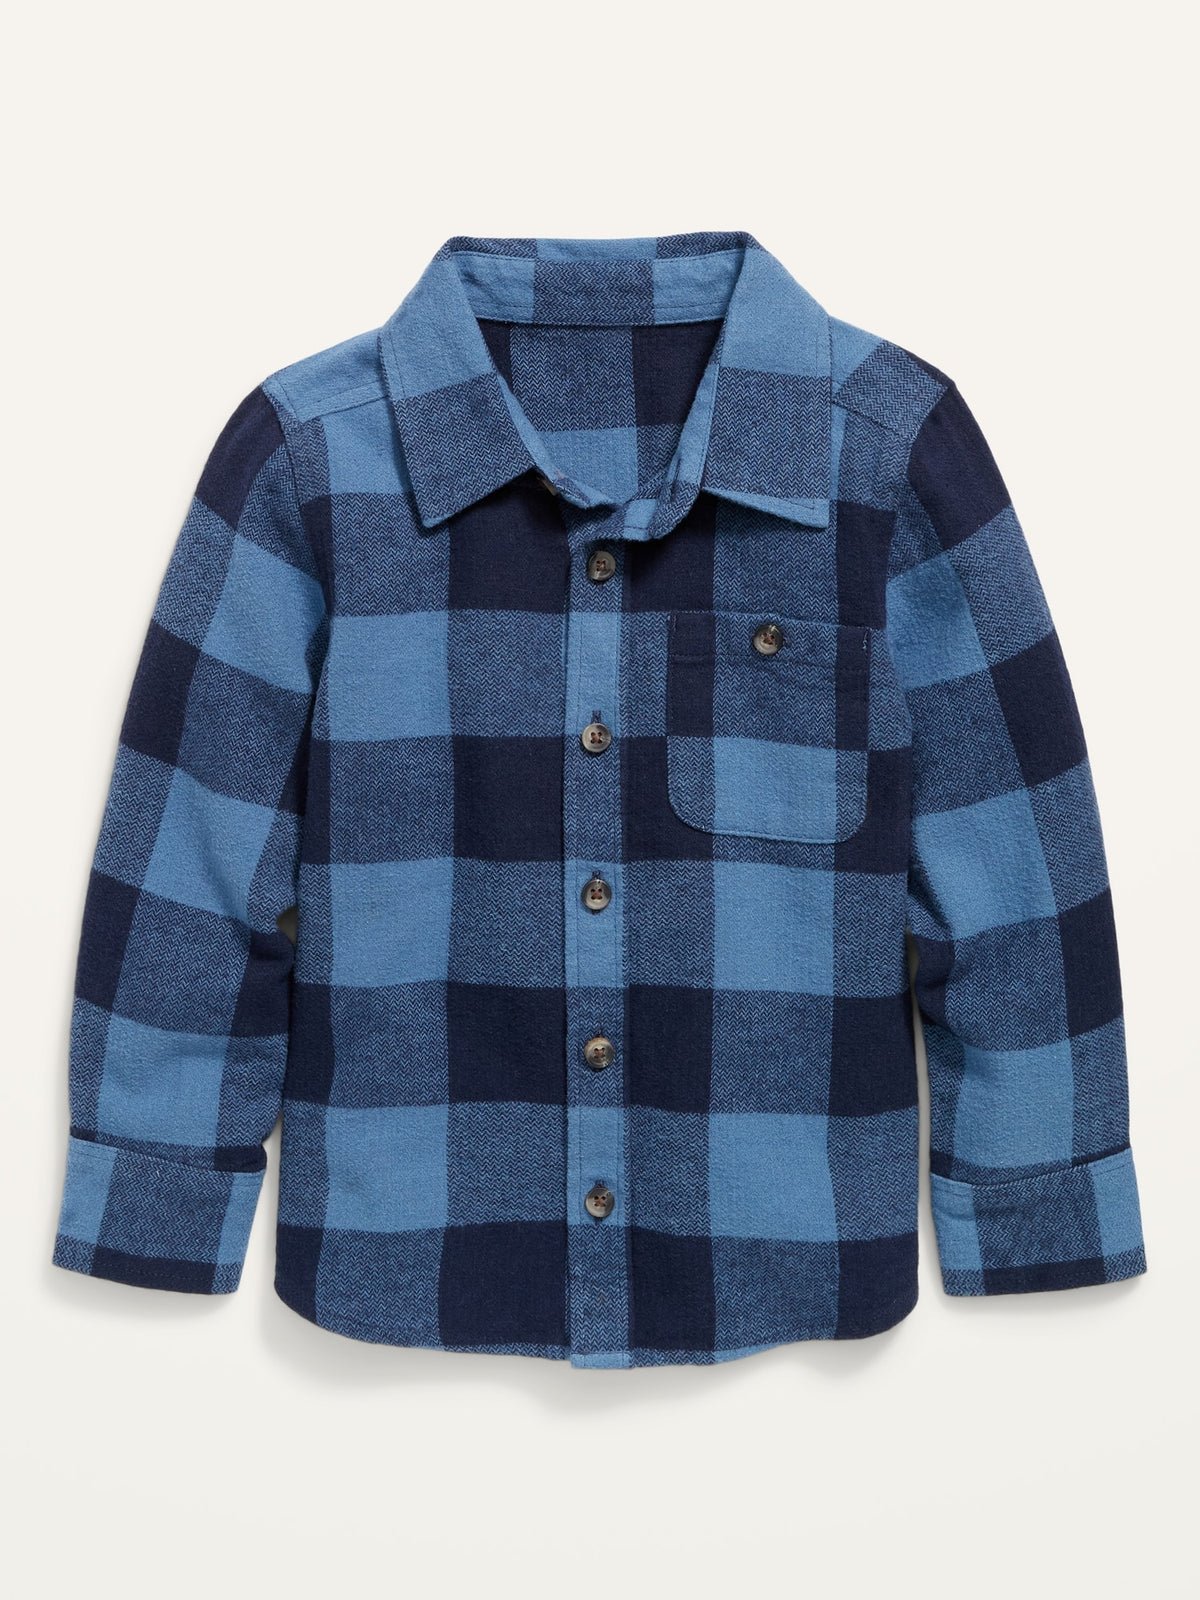 ONLINE EXCLUSIVE_Long-Sleeve Plaid Pocket Shirt for Toddler Boys_BlueBuffalo_1250.jpeg